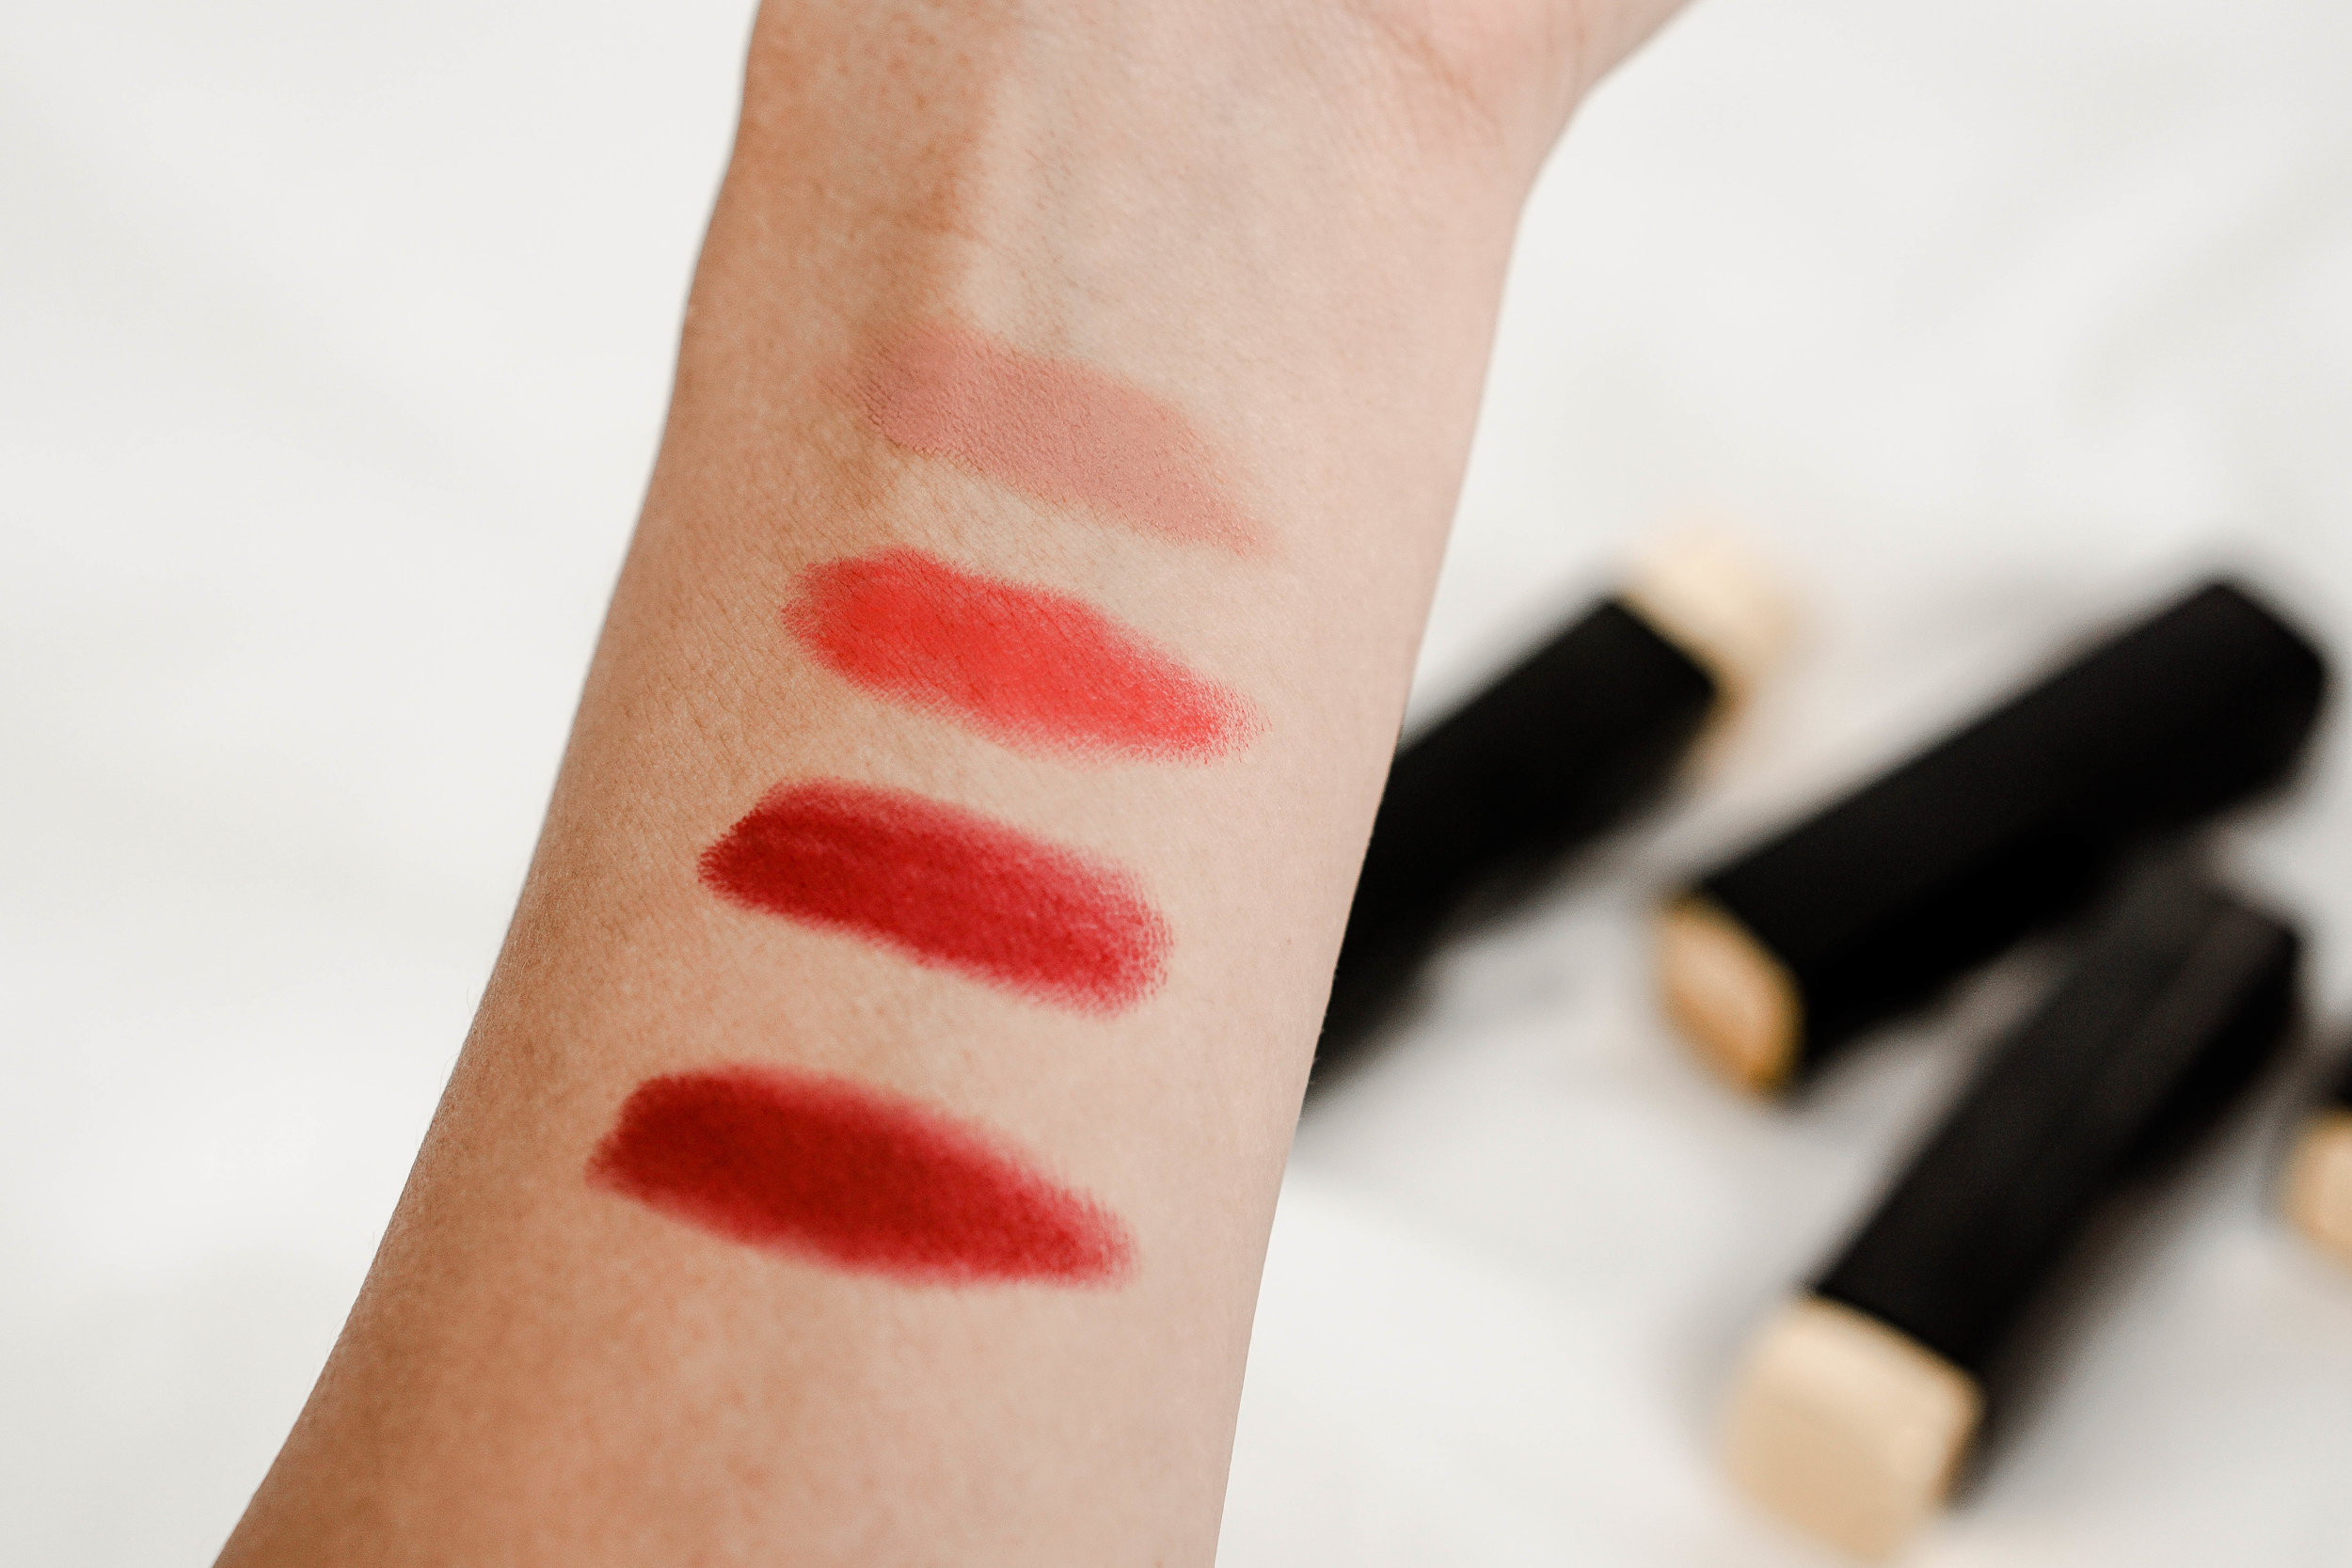 Chanel Rouge Allure Luminous Intense Lip Colour - Illusion